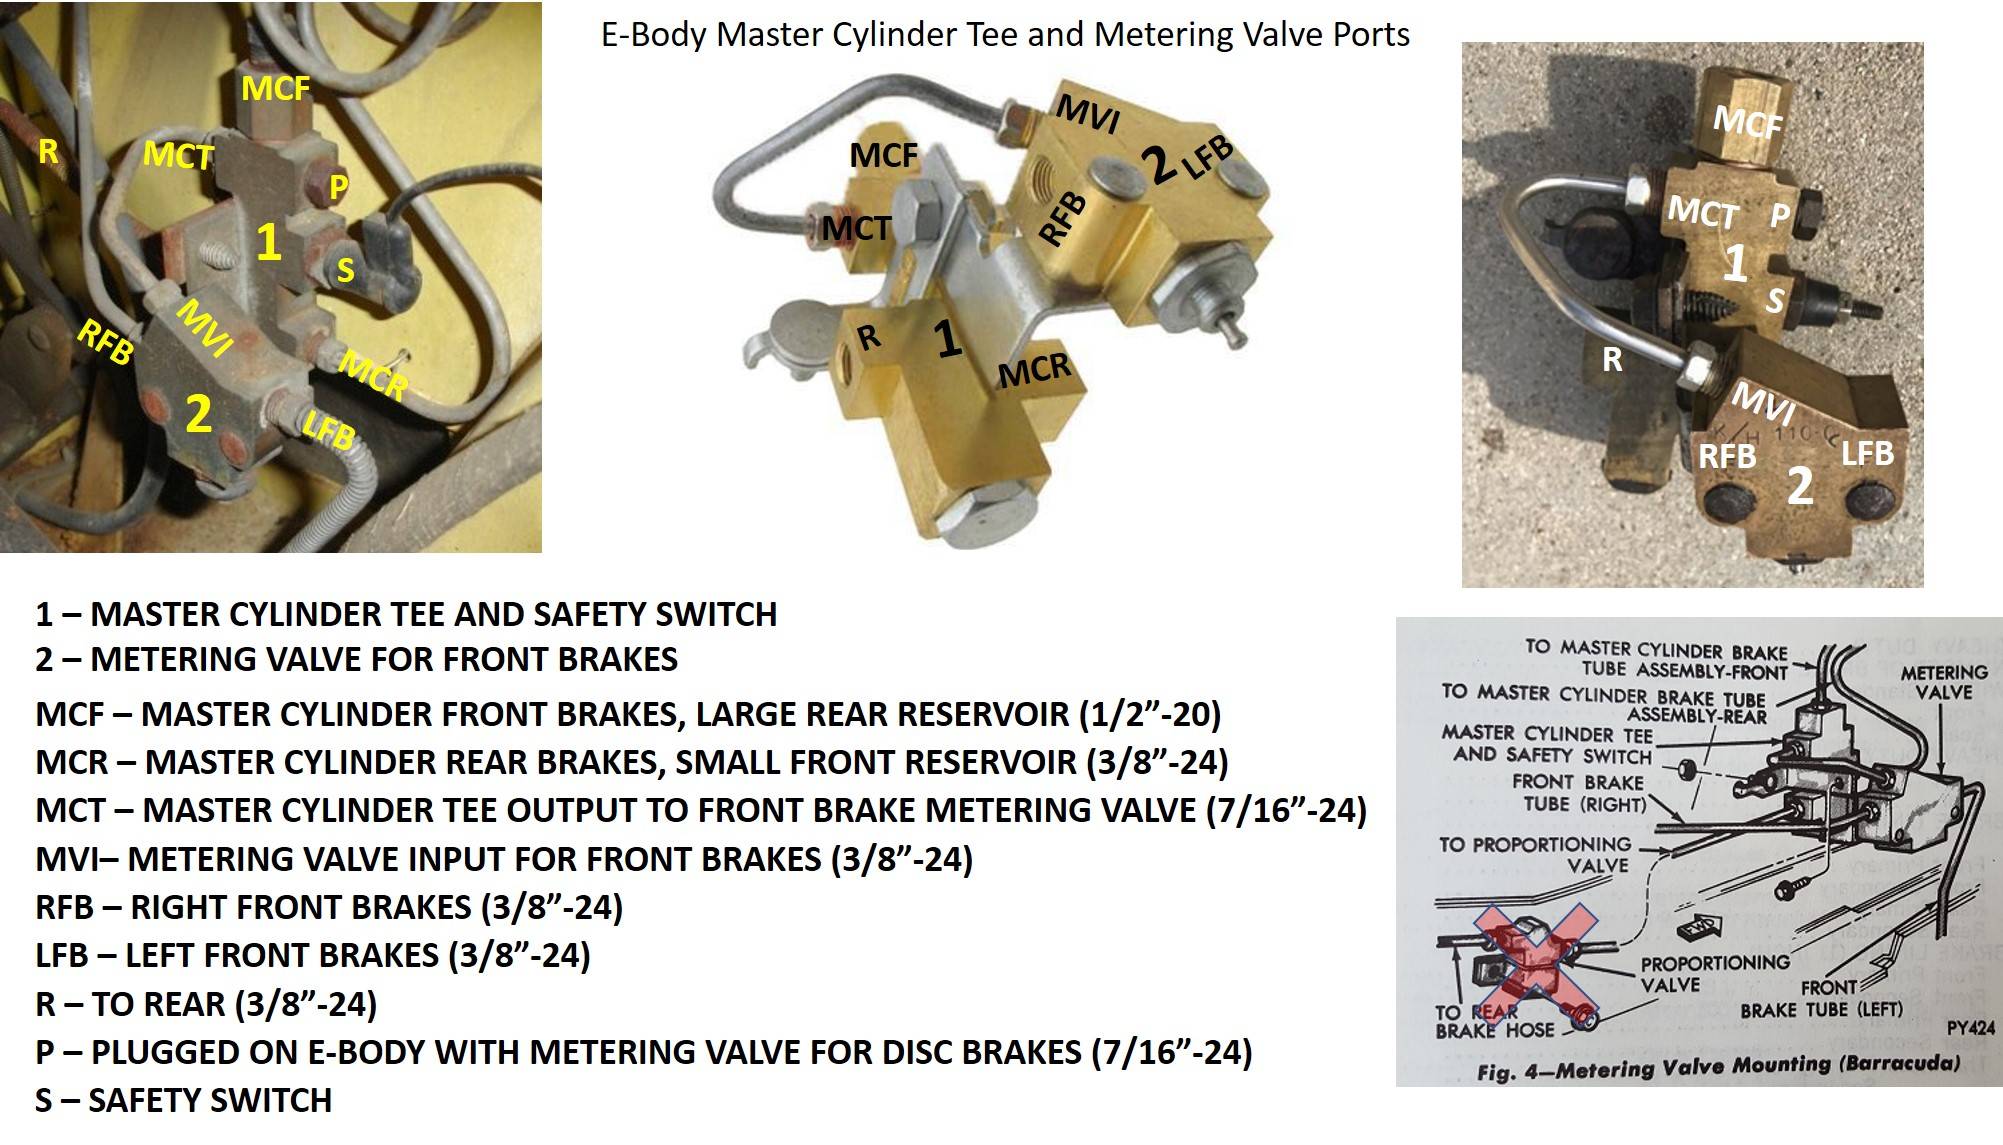 E-Body Master Cylinder Tee and Metering Valve Port Diagram.jpg